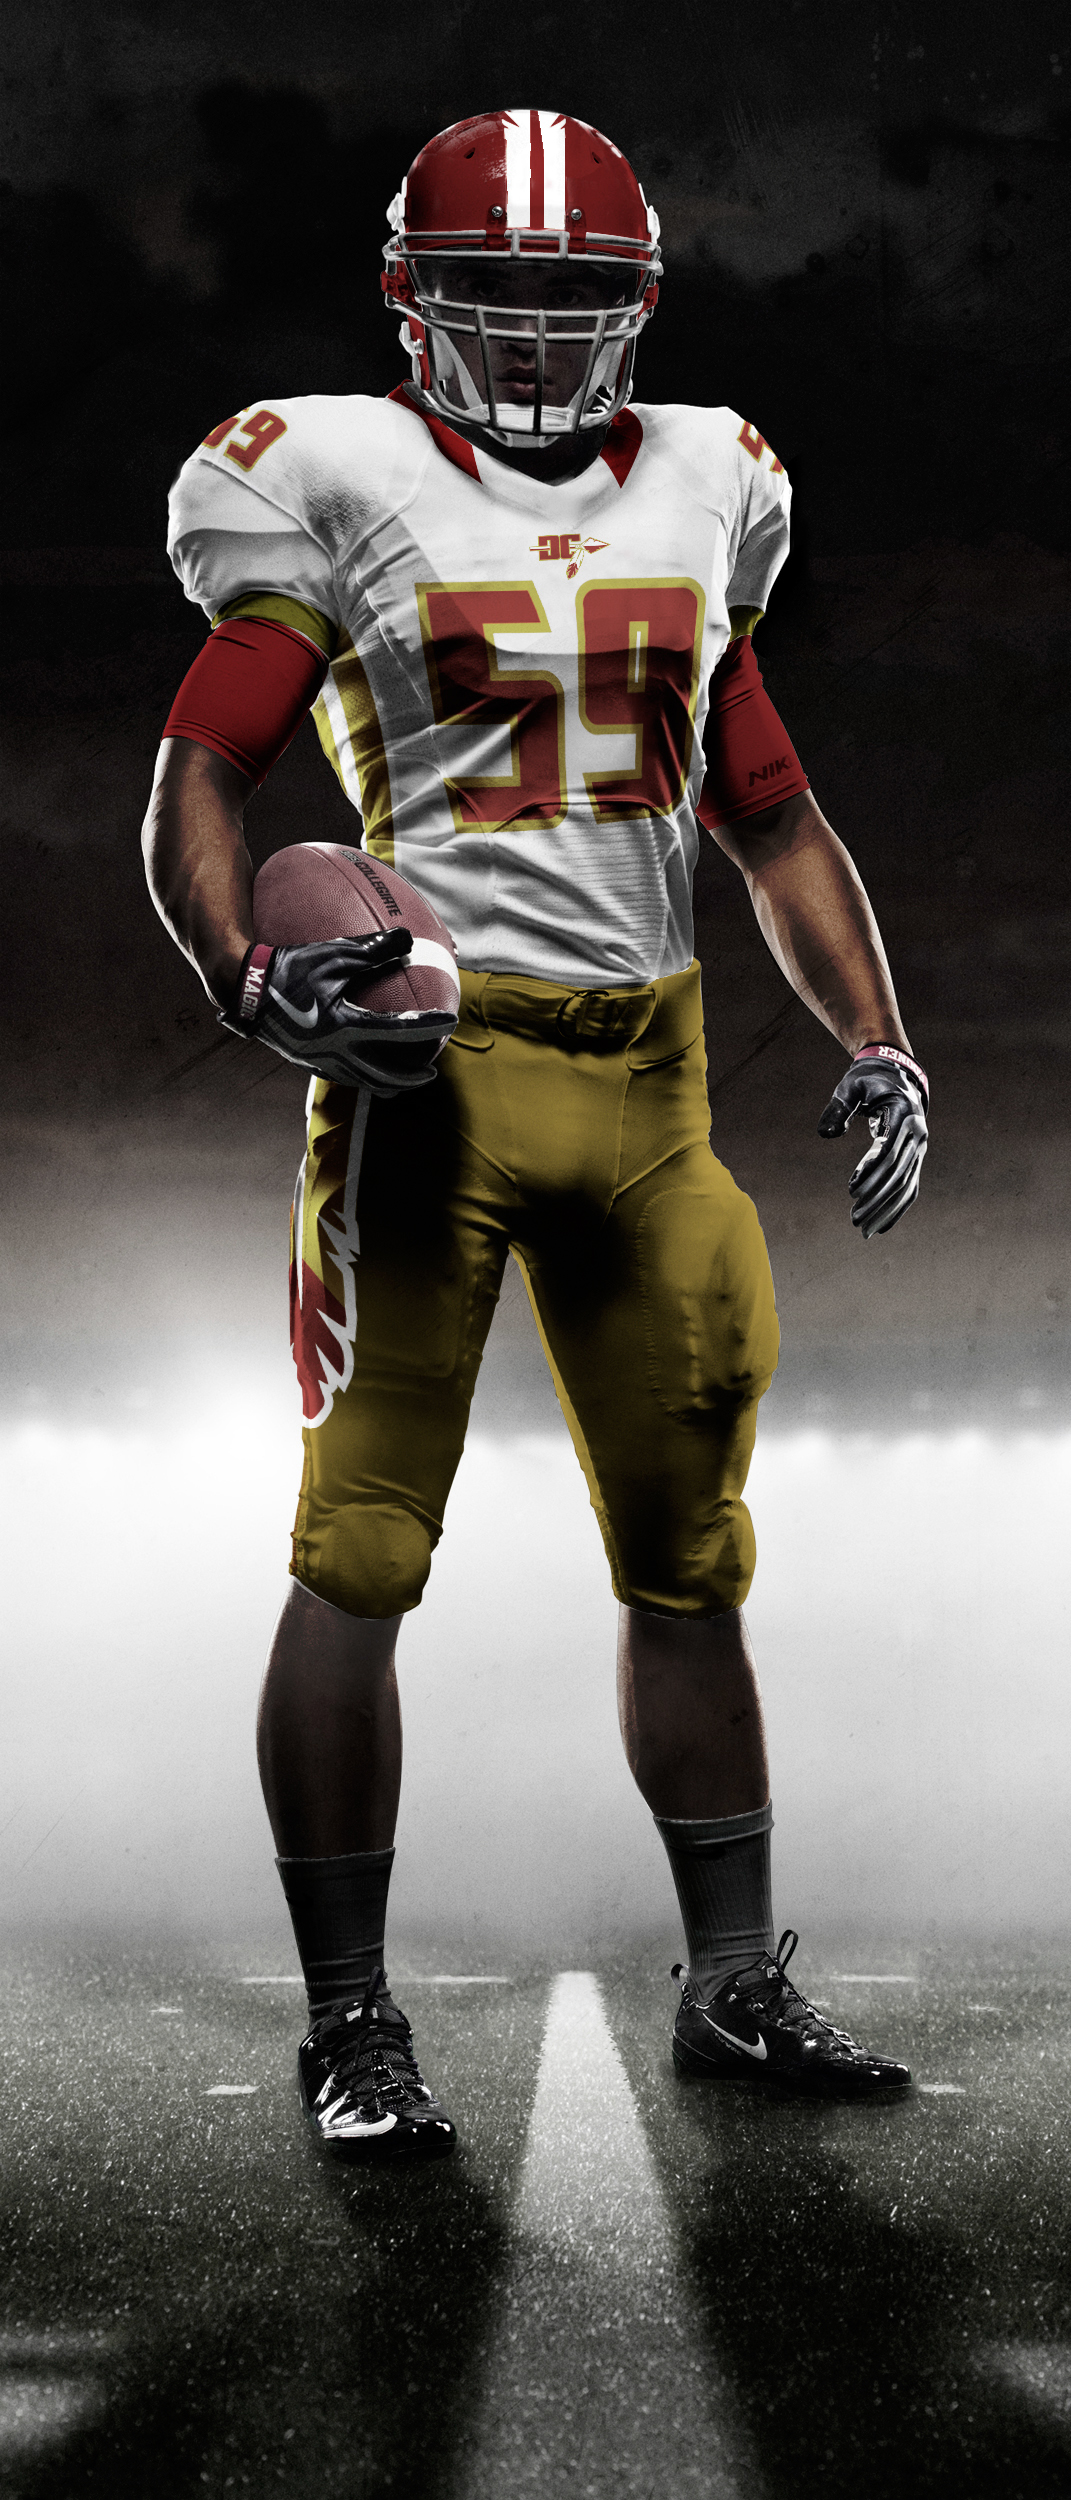 Adobe Portfolio Washington Redskins  #HTTR  RGIII  redesign  warriors  dc  uniforms Redskins Jerseys rg3 customink  Equality tolerance  cultural change